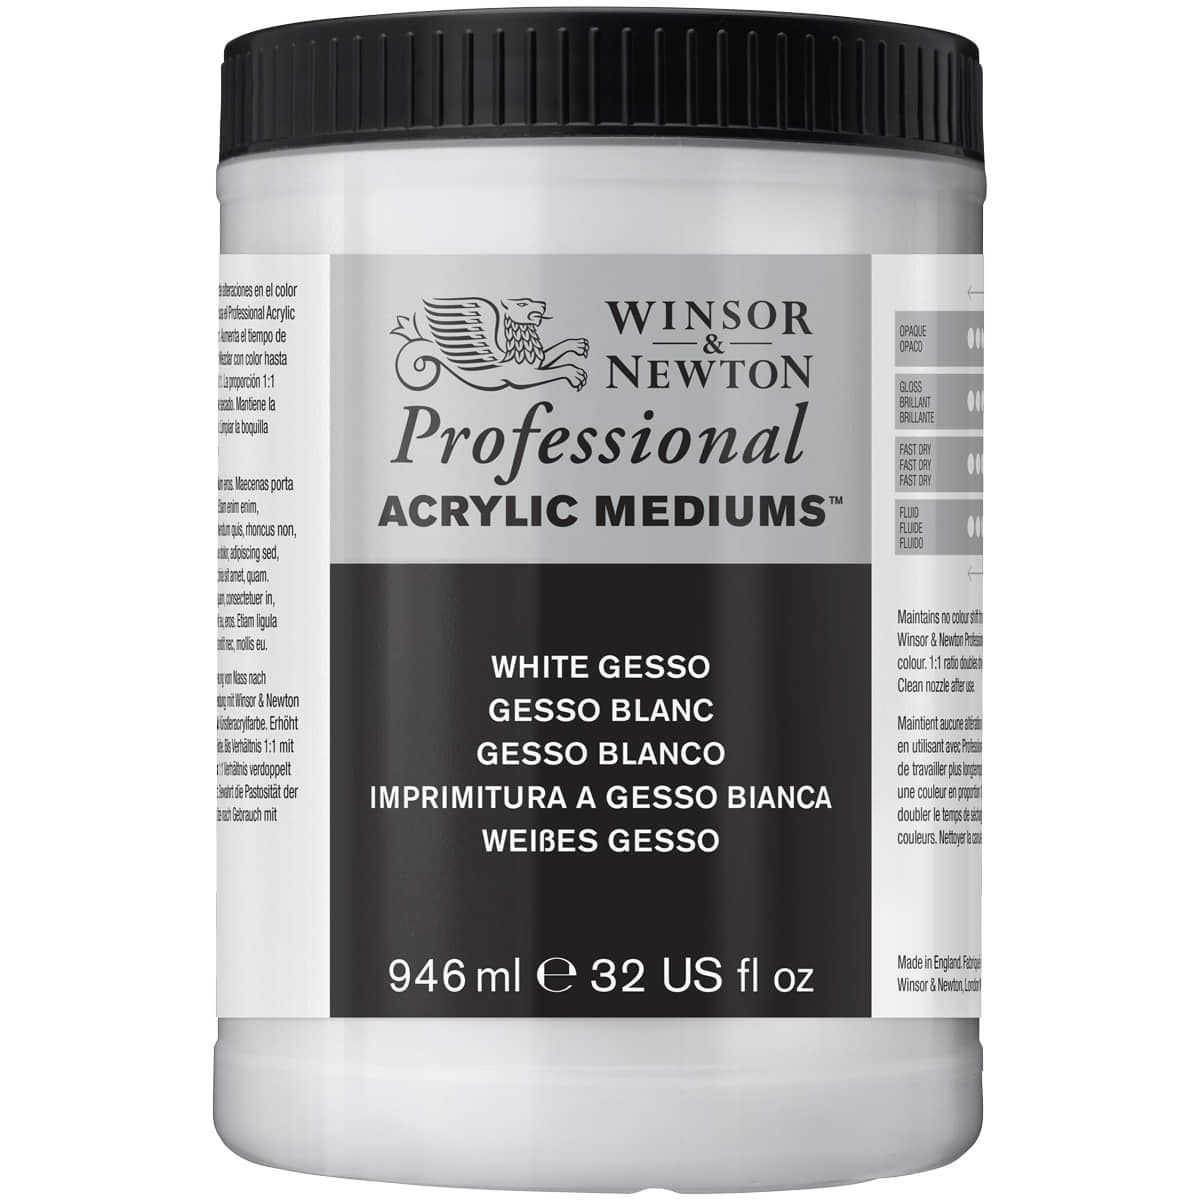 Winsor & Newton Professional Acrylic Gesso 450ml Clear